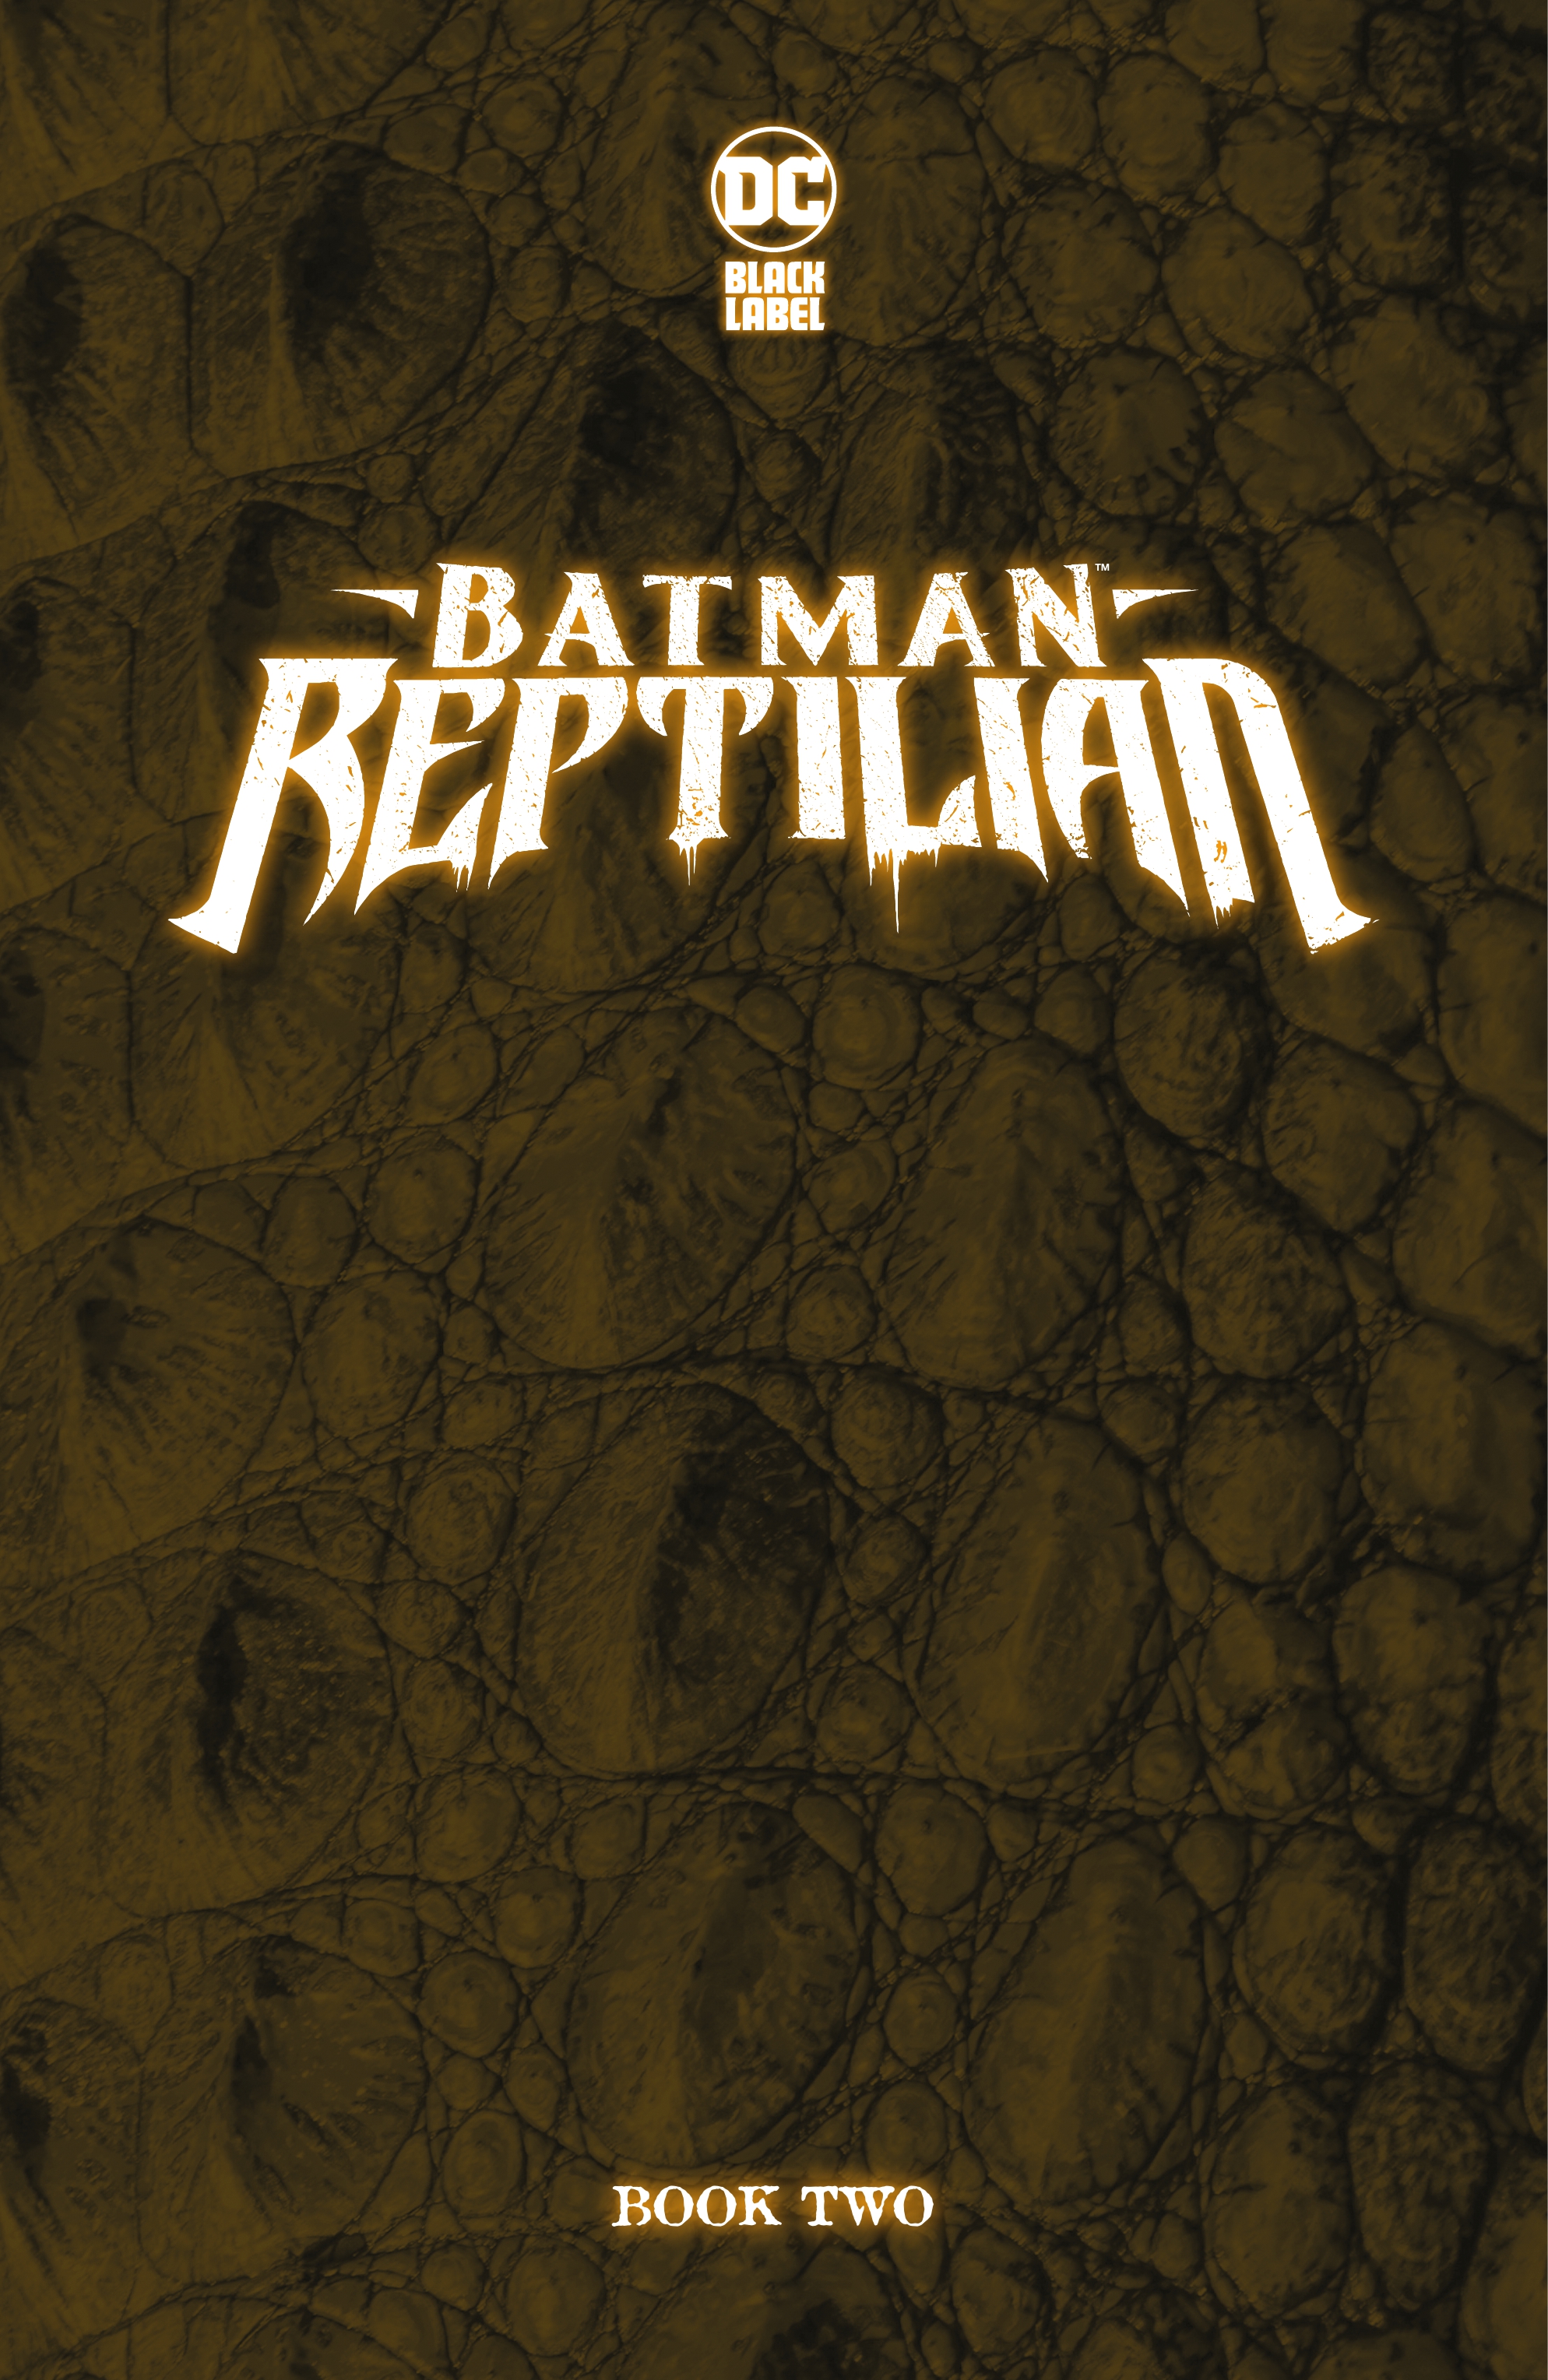 Read online Batman: Reptilian comic -  Issue #2 - 3